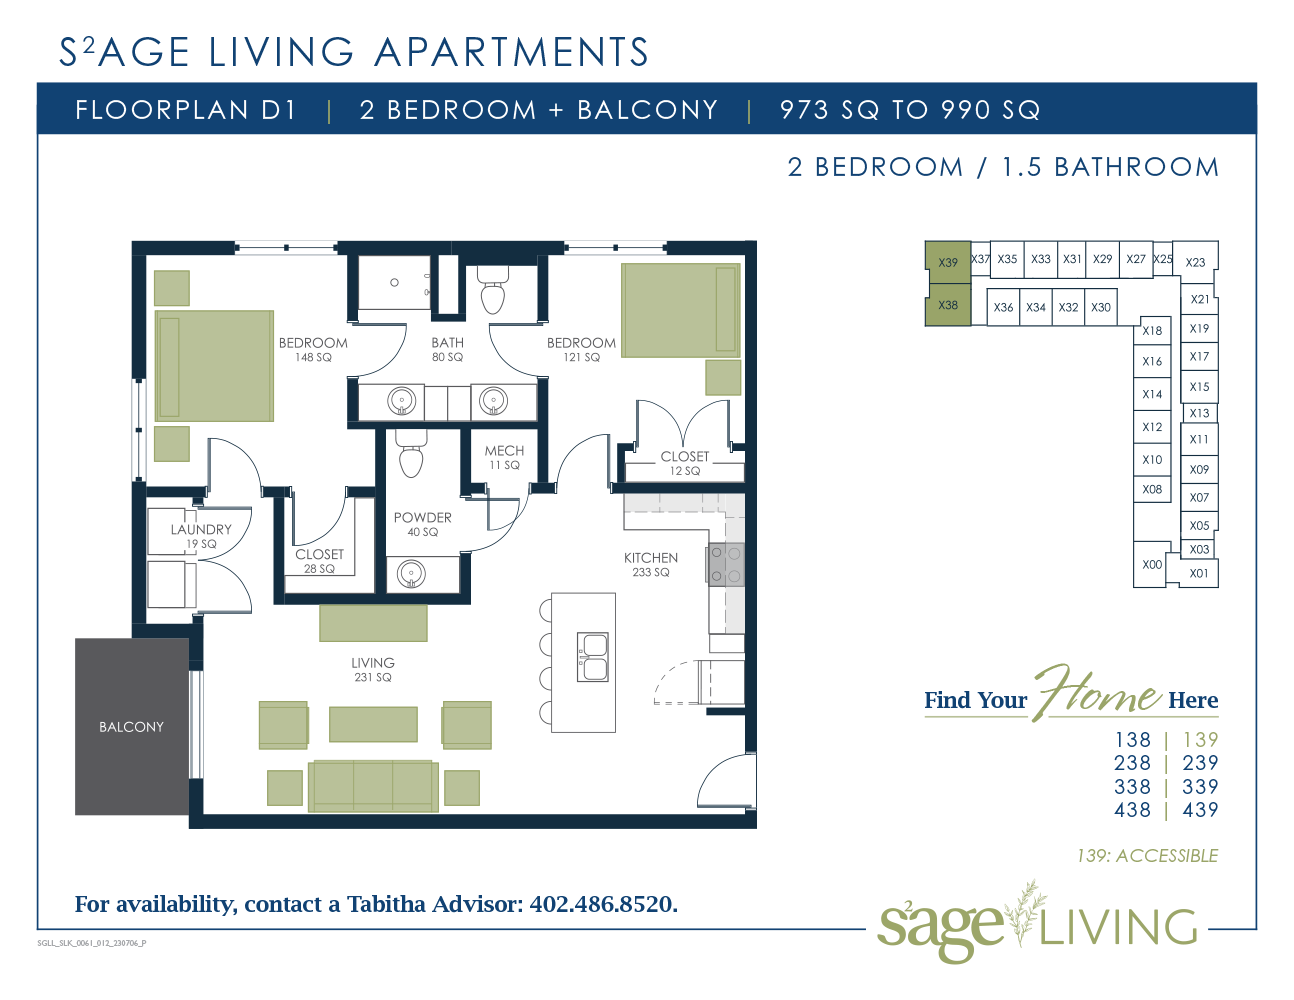 S2age Living Floor Plan, Apartment D1